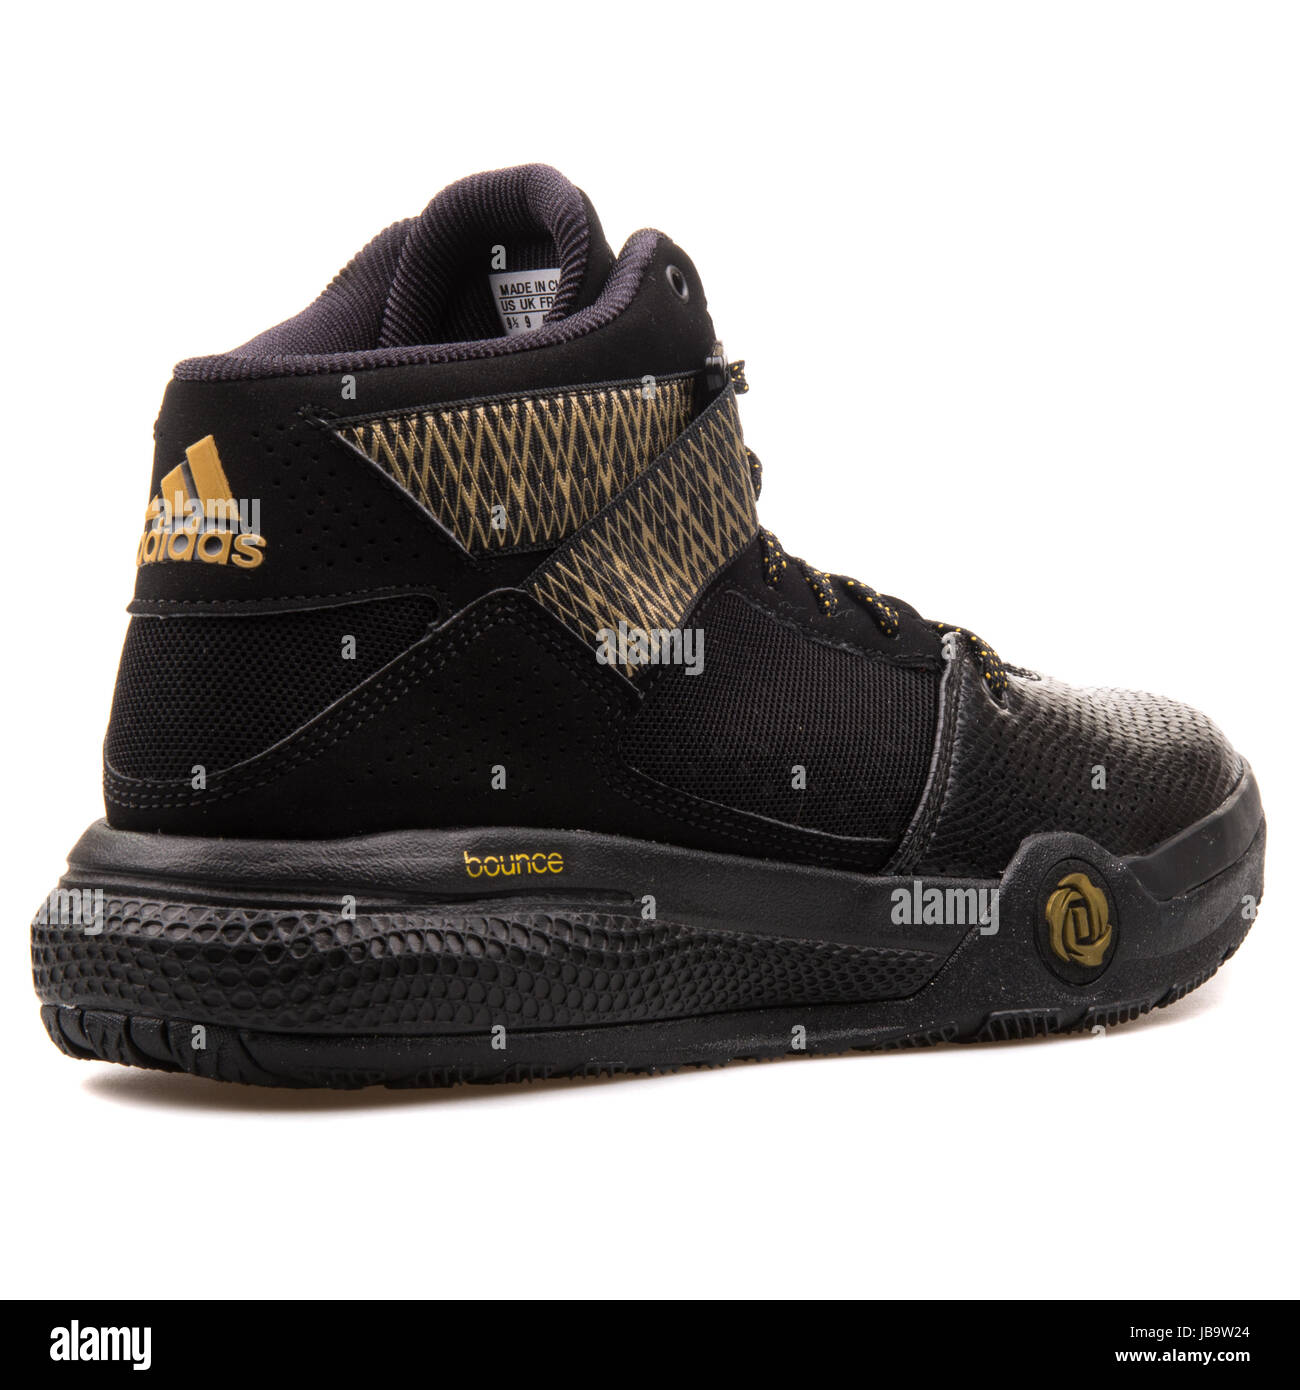 Adidas D Rose 773 IV schwarz und Gold Herren Basketball-Schuhe - D69592  Stockfotografie - Alamy